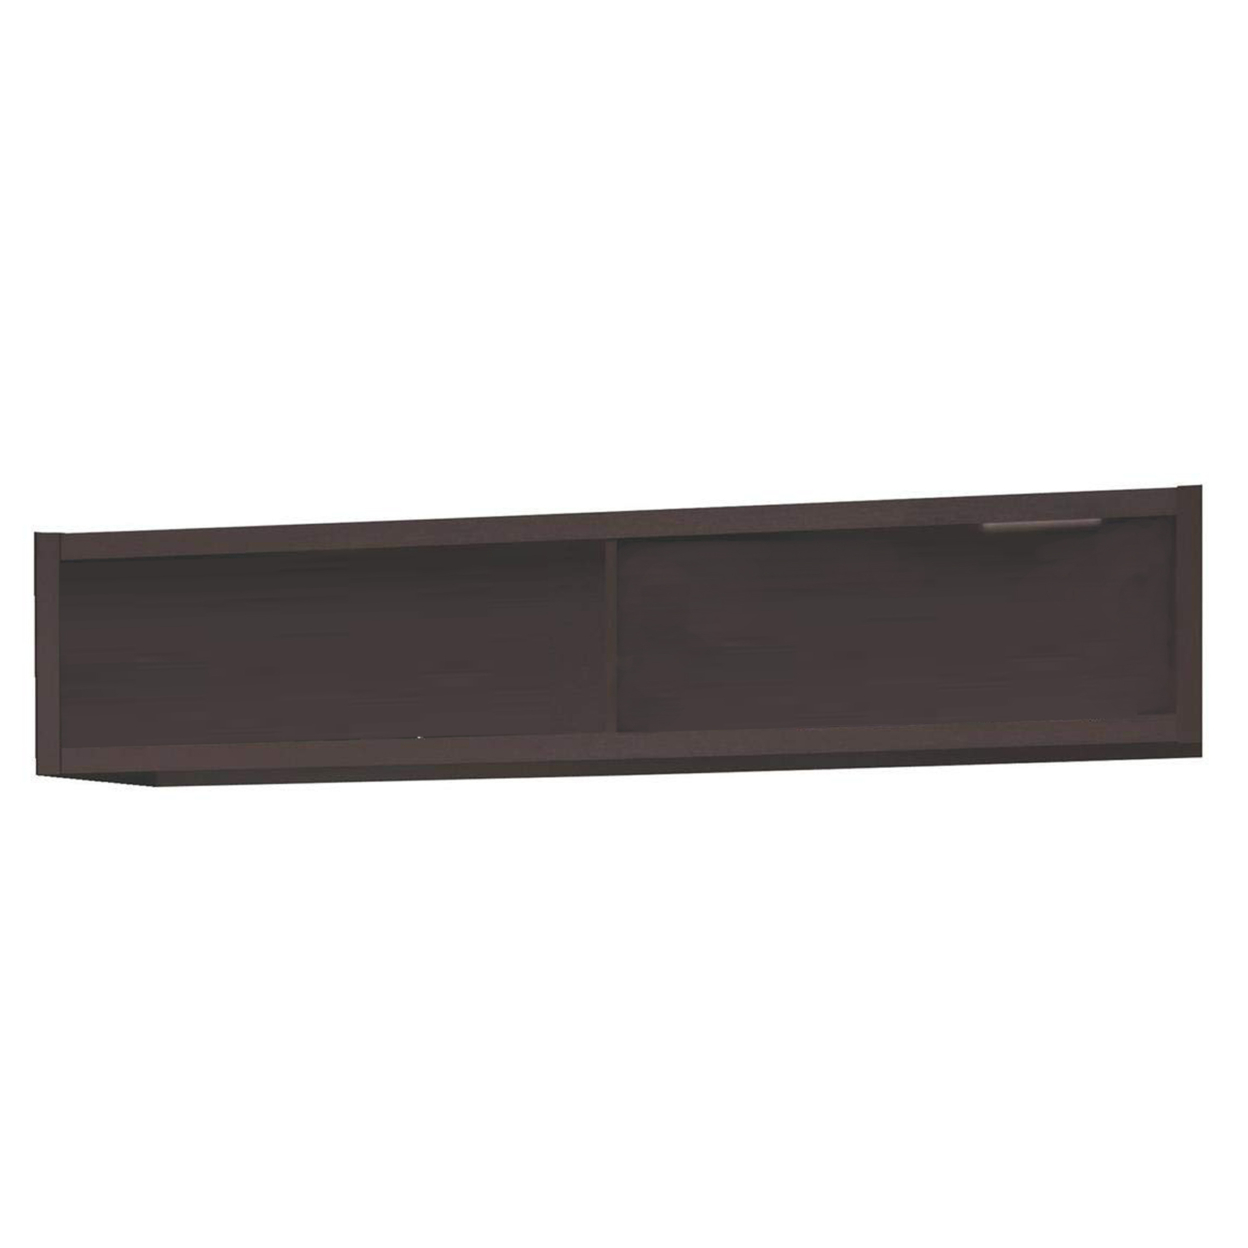 Wooden Media Cabinet Bridge With Back Panel, Espresso Brown- Saltoro Sherpi